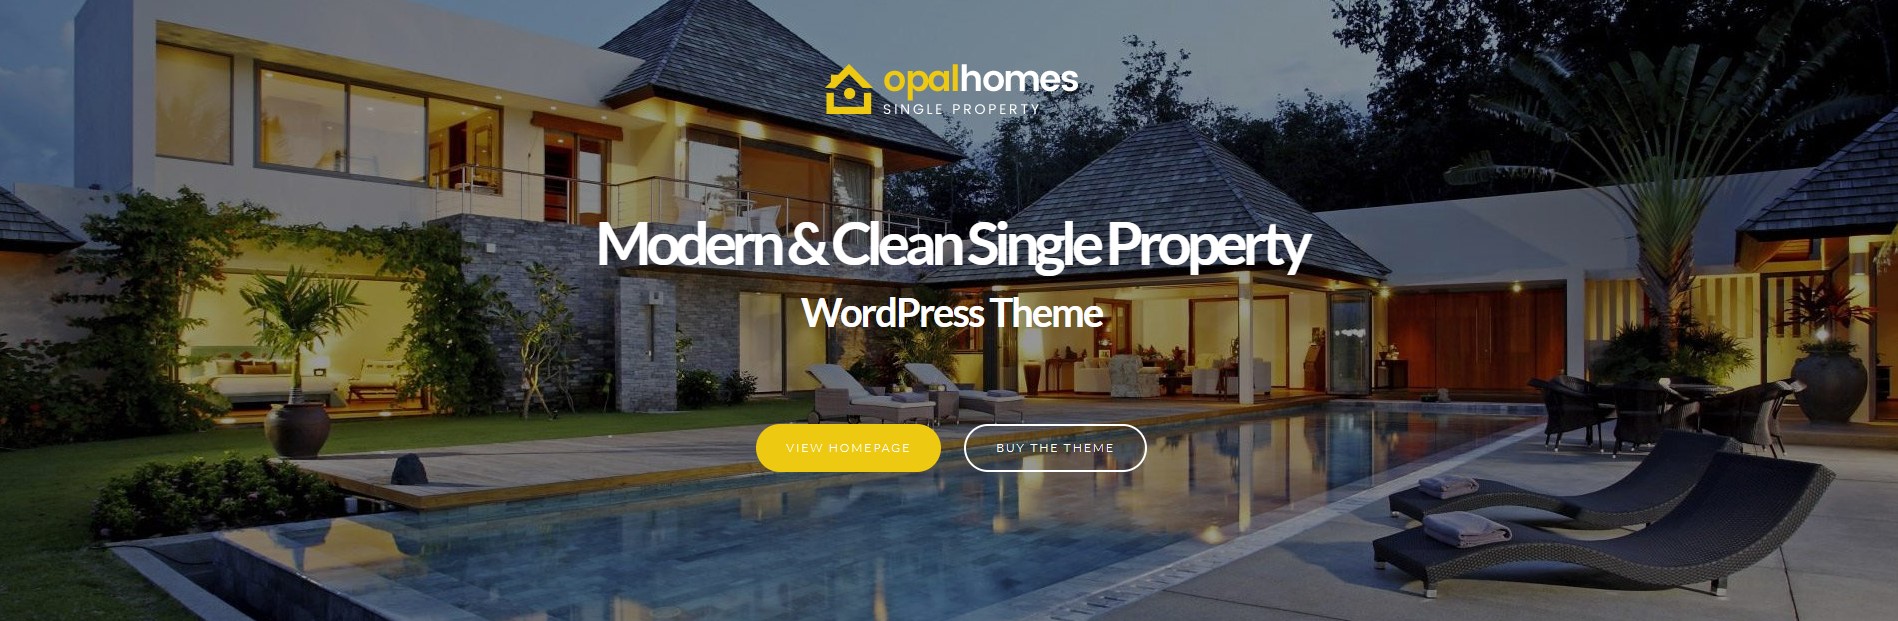 Opalhomes – Single Property WordPress Theme